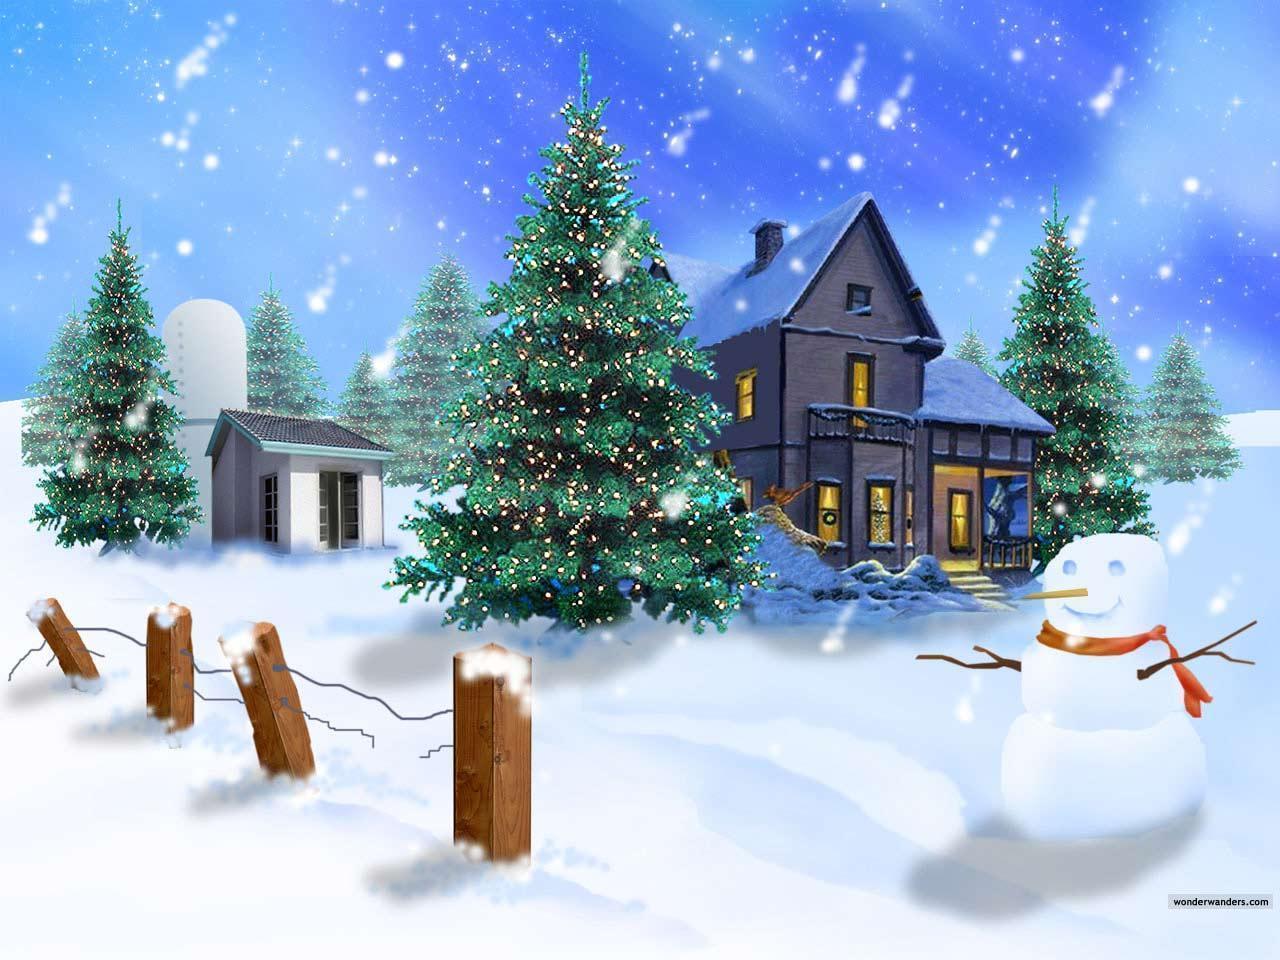 Snowman picture free desktop background wallpaper image